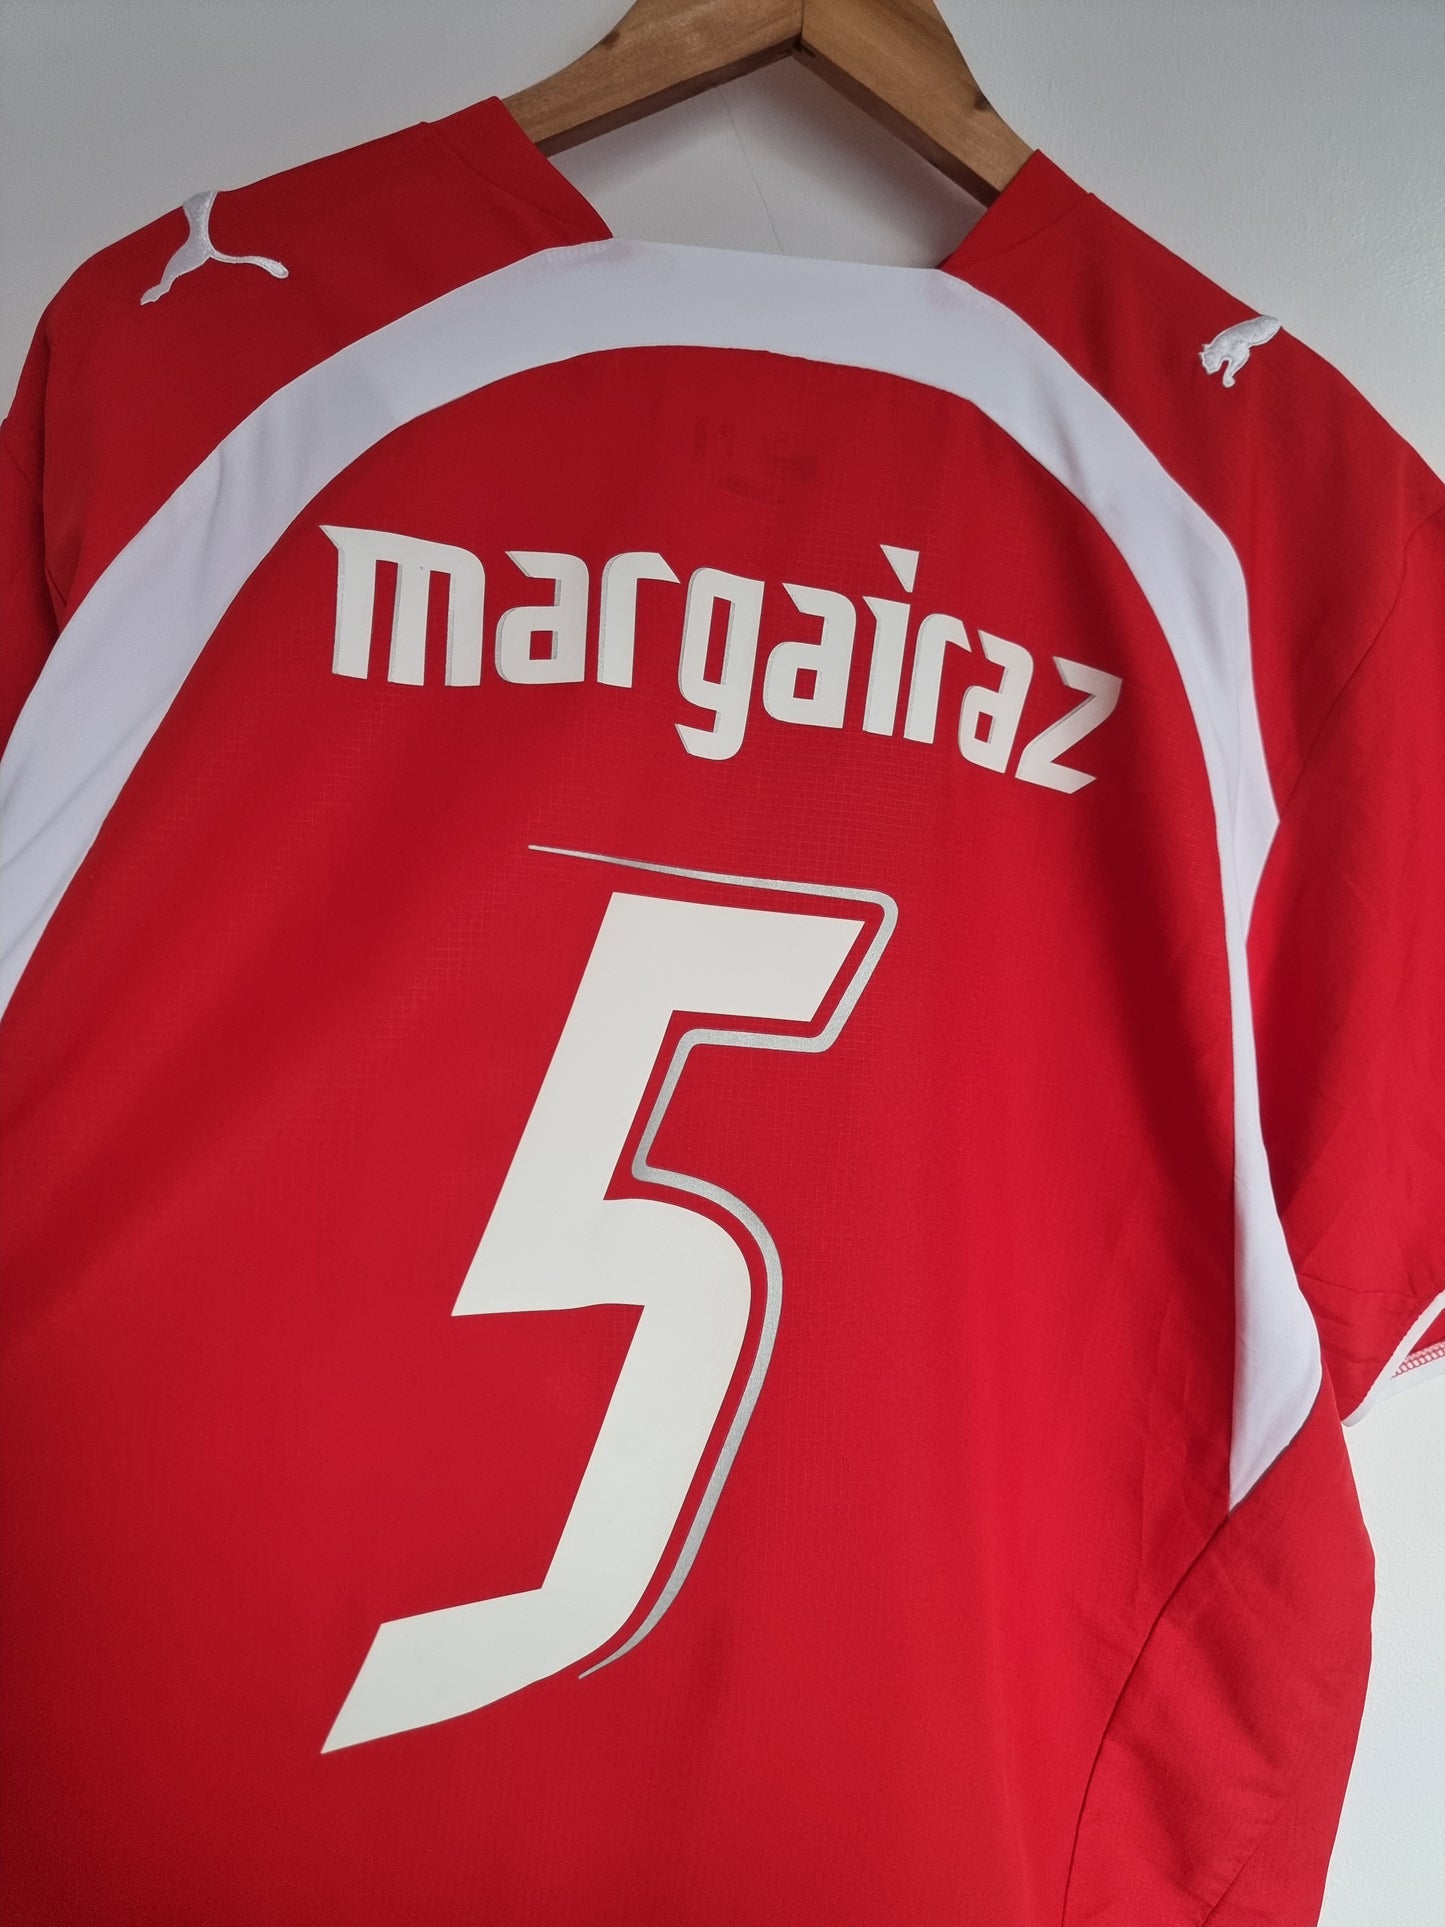 Puma Switzerland 06/08 'Margairaz 5' Signed Home Shirt XXL